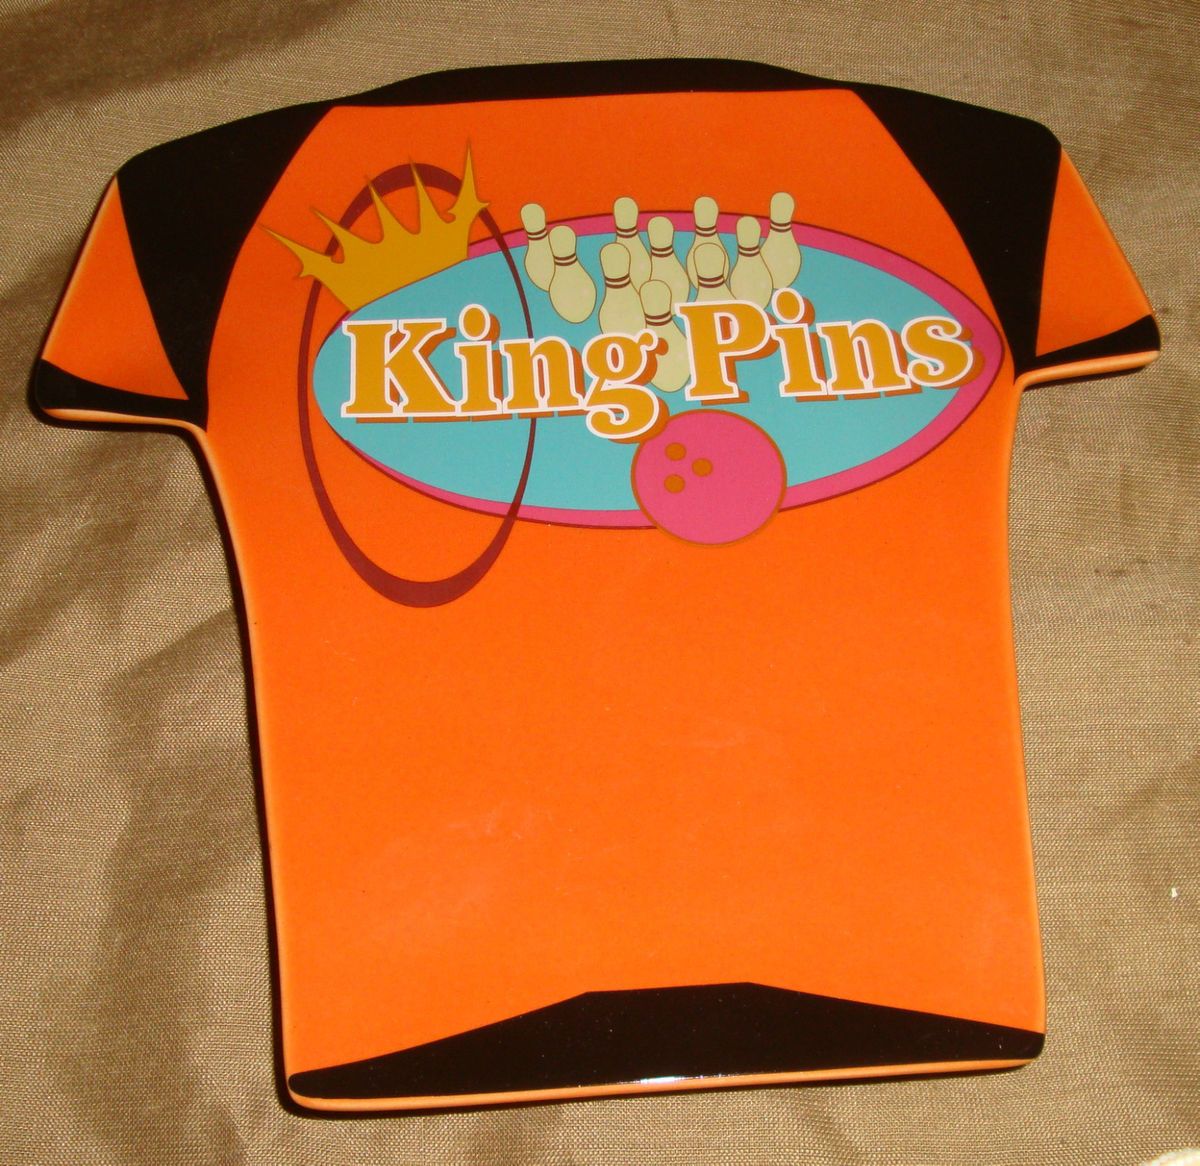 Luminarc BOWLING NIGHT Shirt KING PINS Pins Ball RETRO Snack PLATE